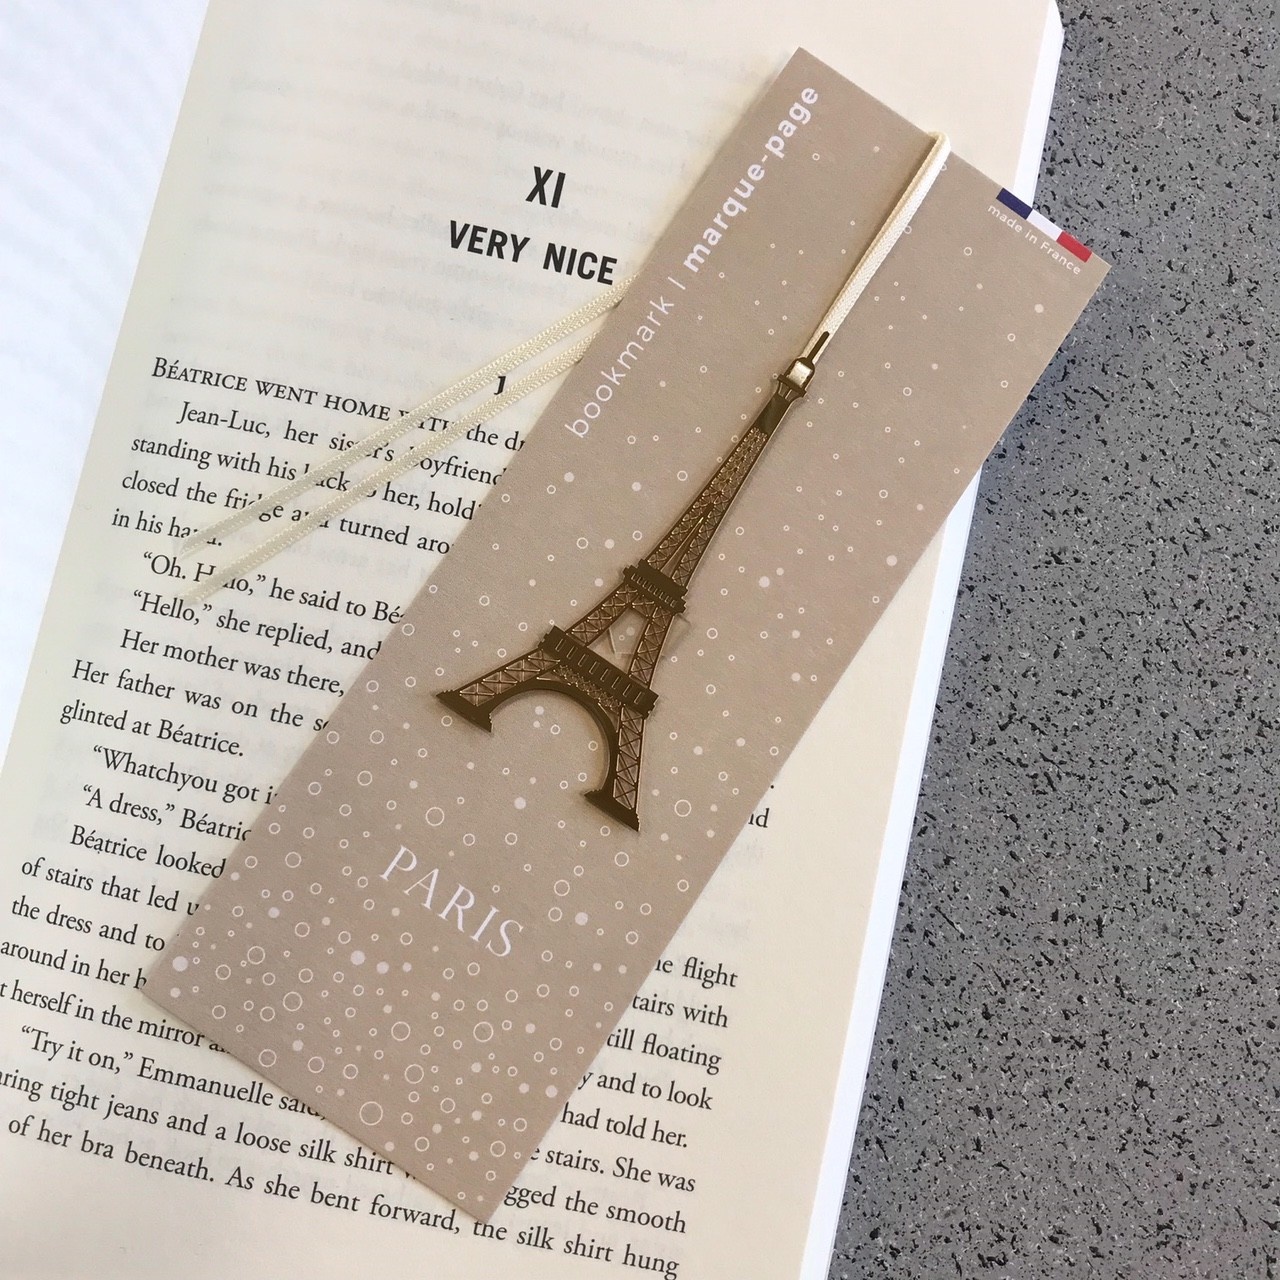 Bookmark Eiffel Tower - Please Do Not Enter